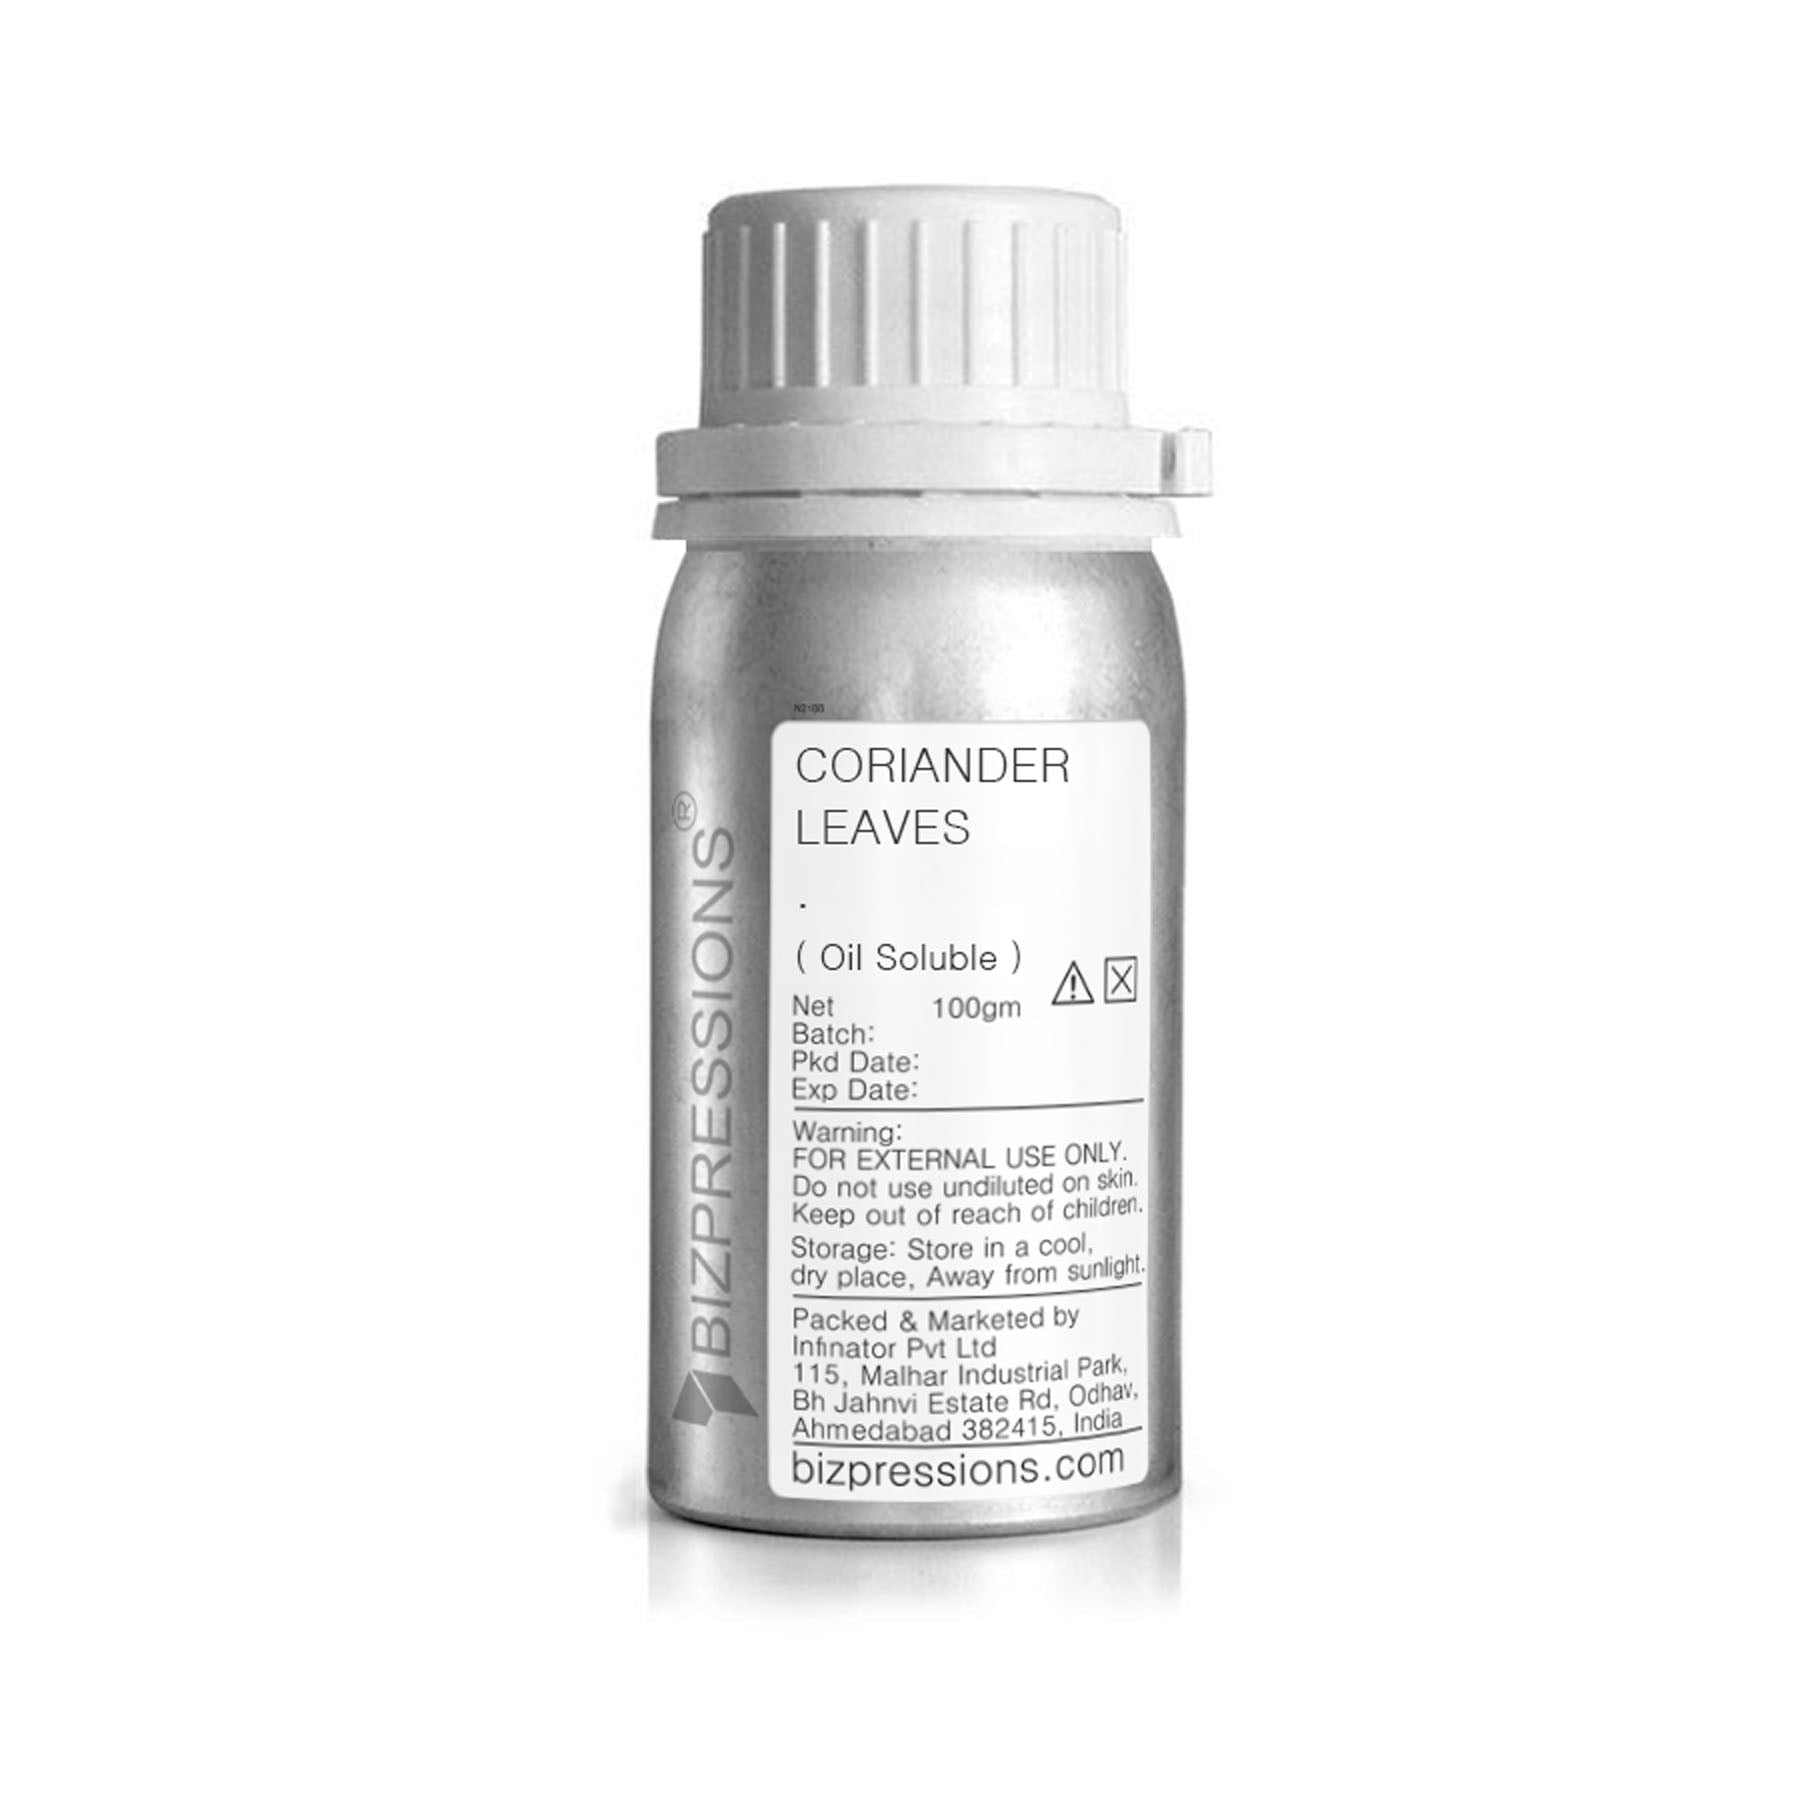 CORIANDER LEAVES - Fragrance ( Oil Soluble ) - 100 gm